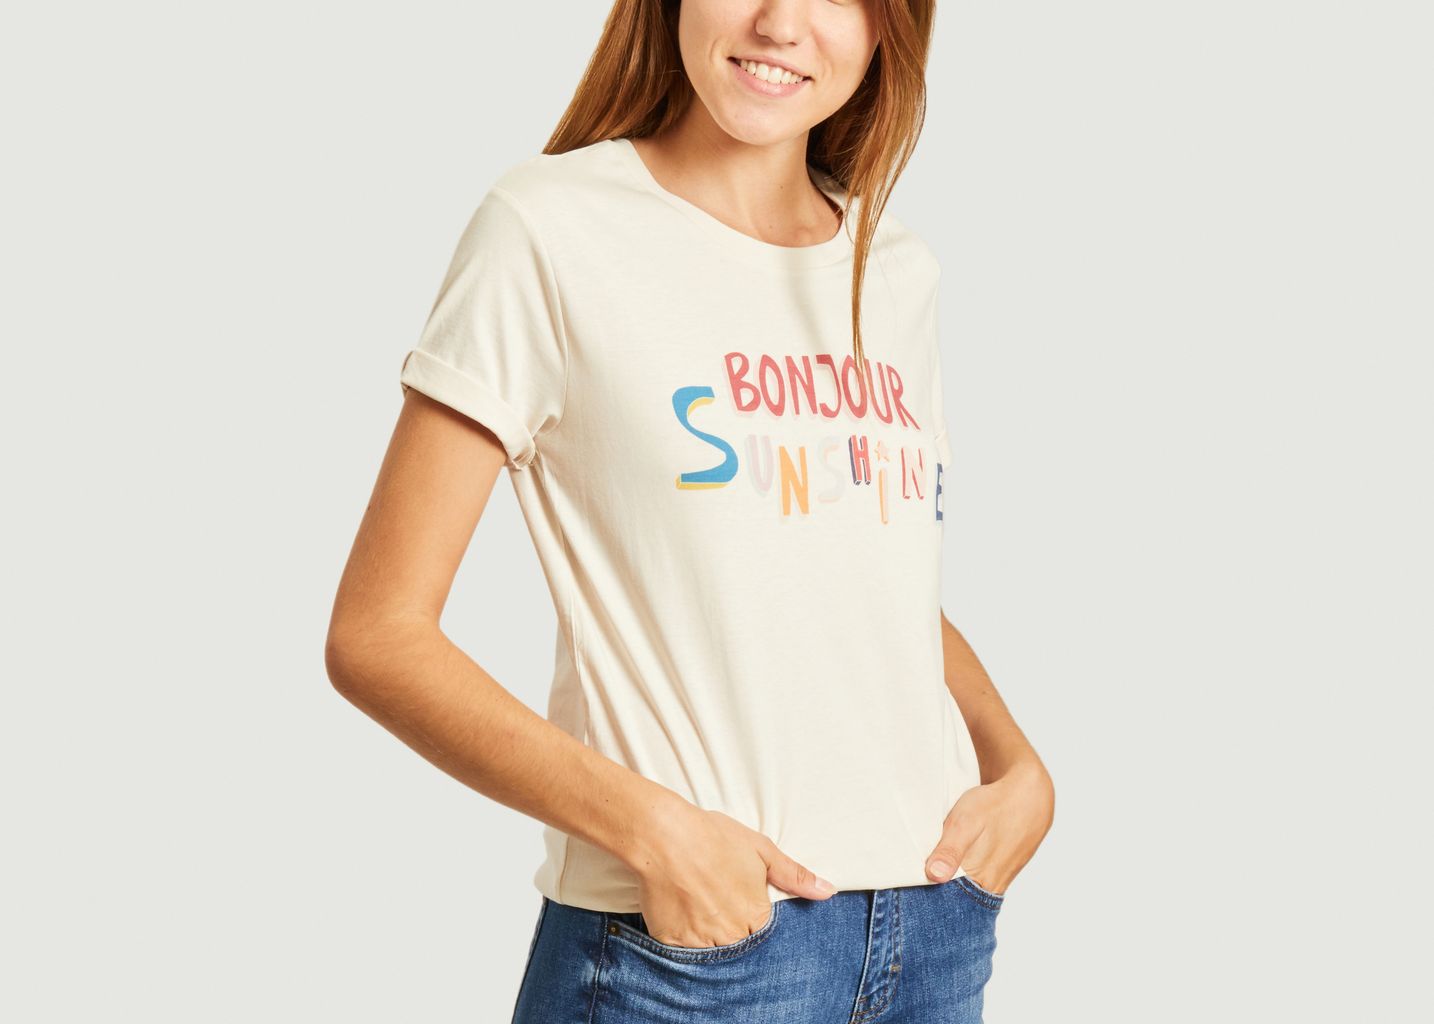 T-shirt hello sunshine - Elise Chalmin